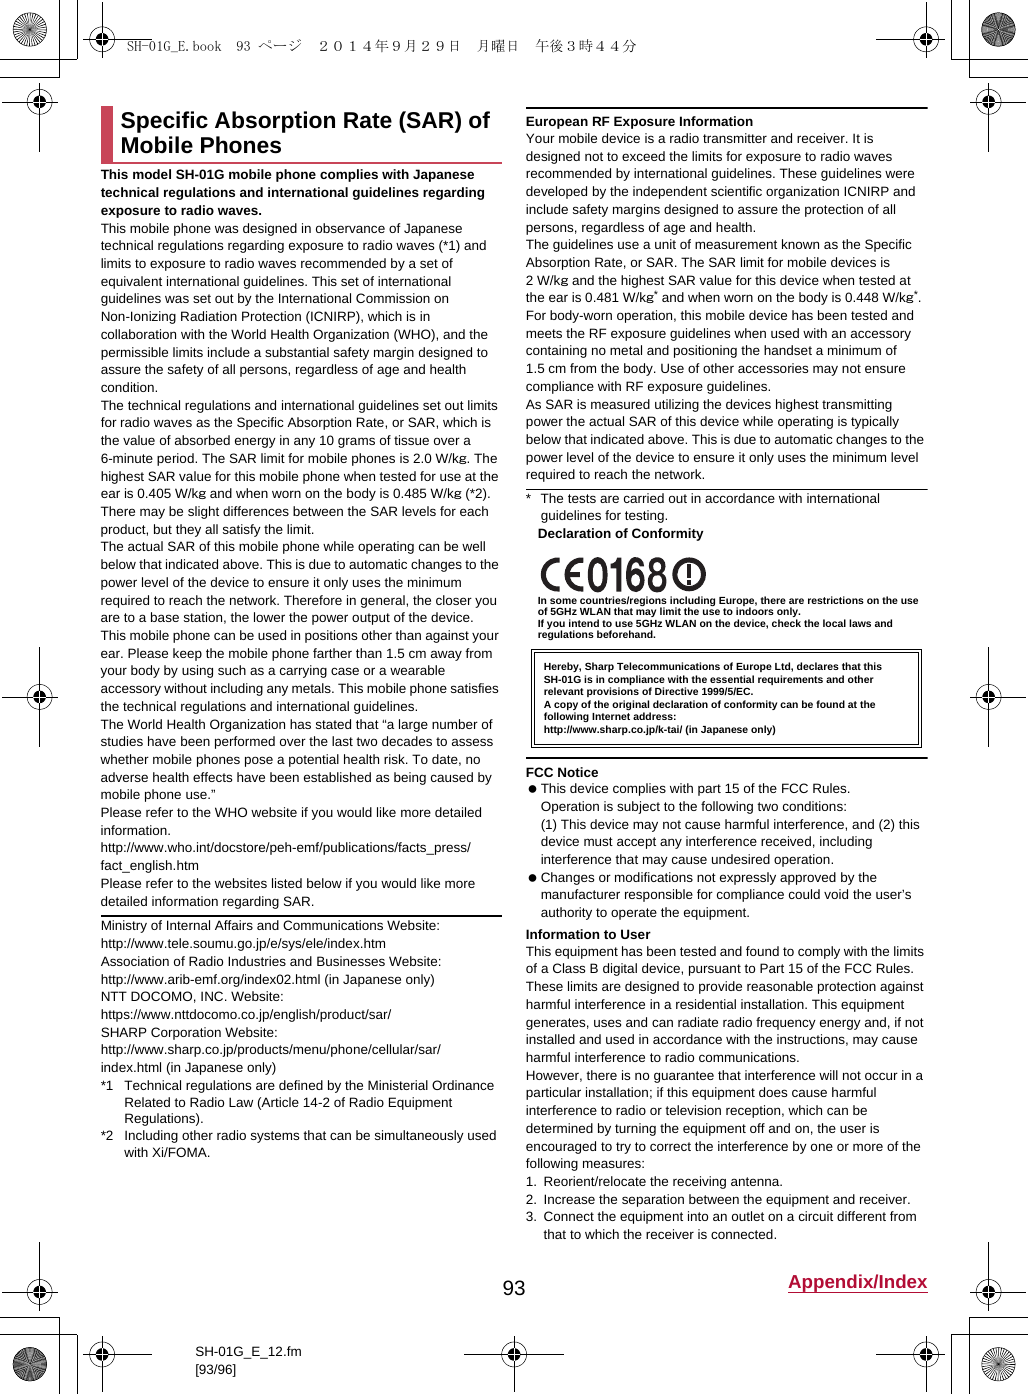 Page 23 of Sharp HRO00212 Smart Phone User Manual